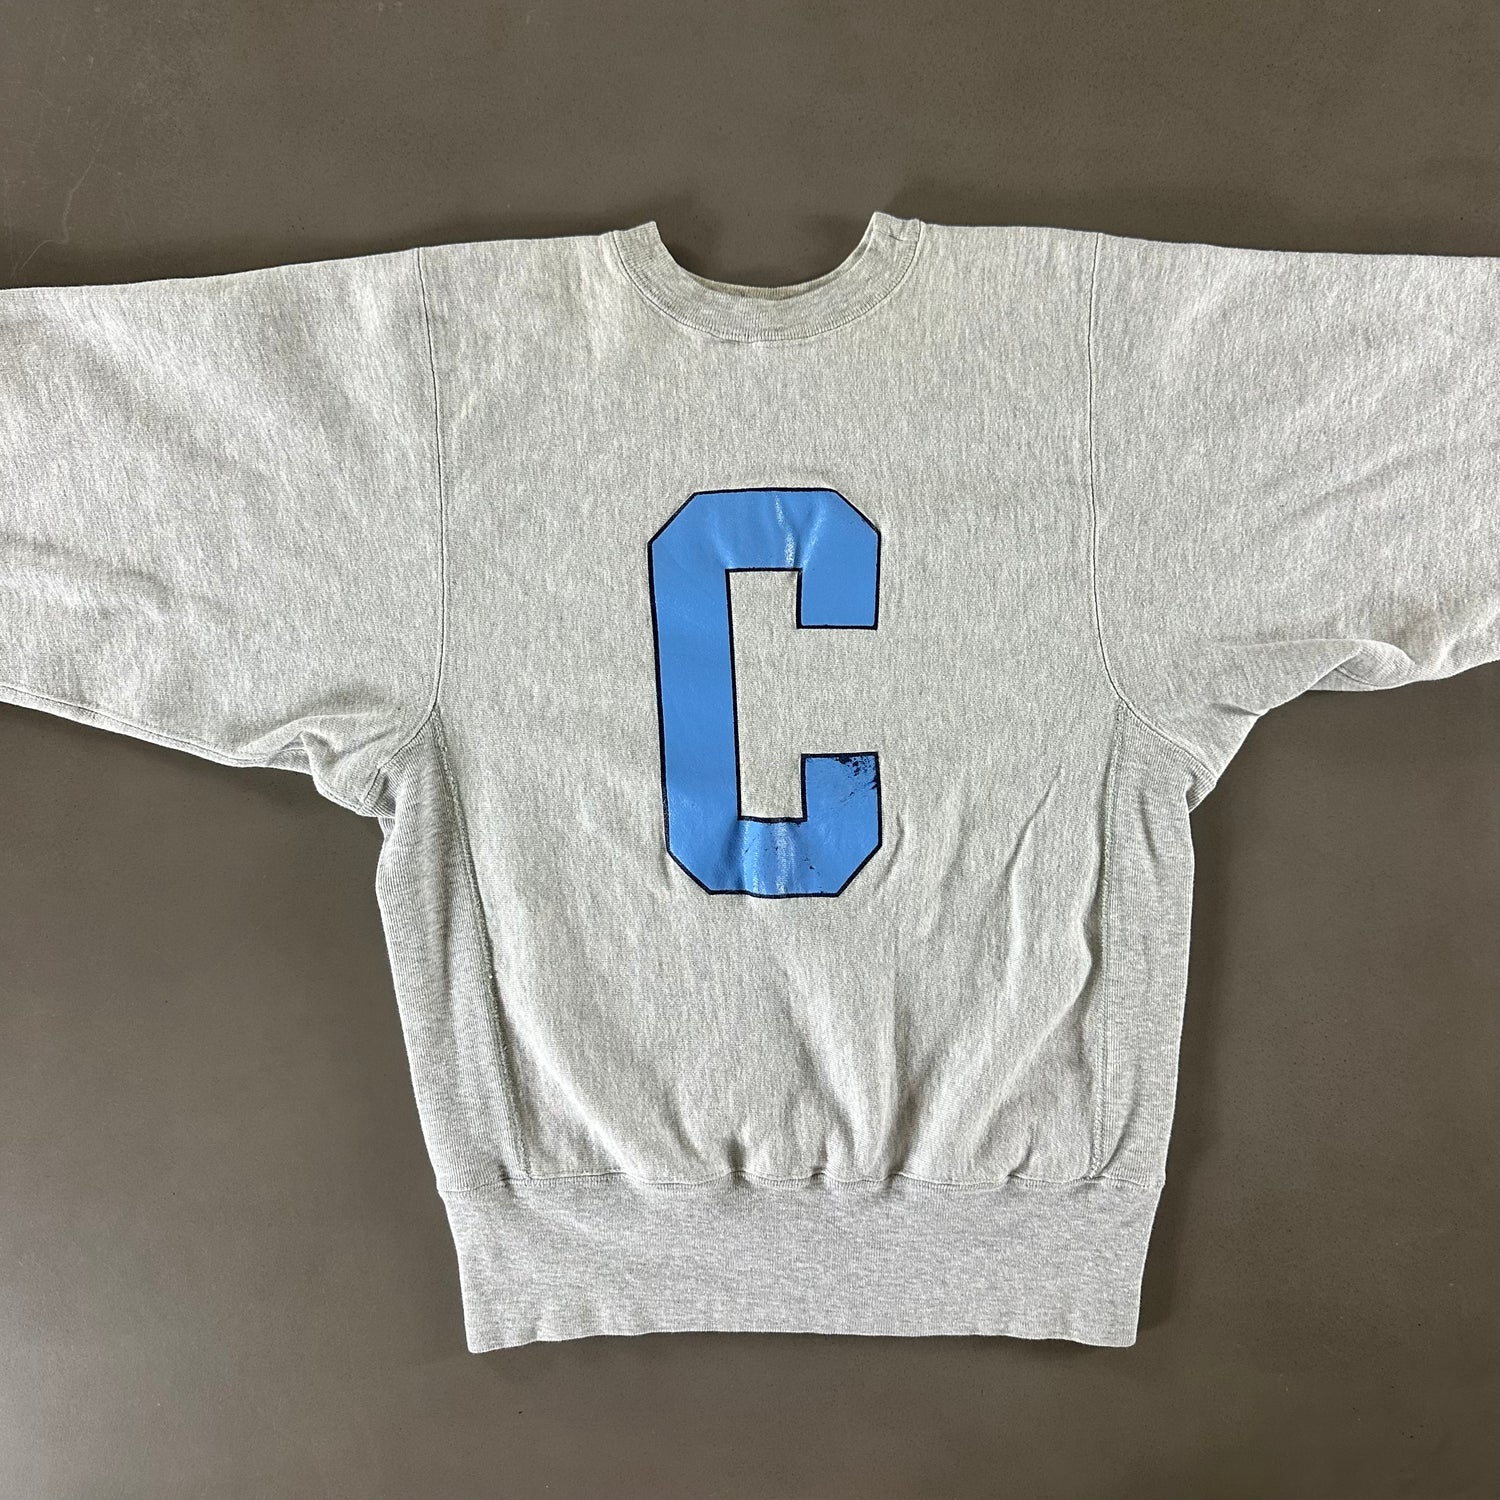 Vintage 1990s Columbia University Sweatshirt size Medium